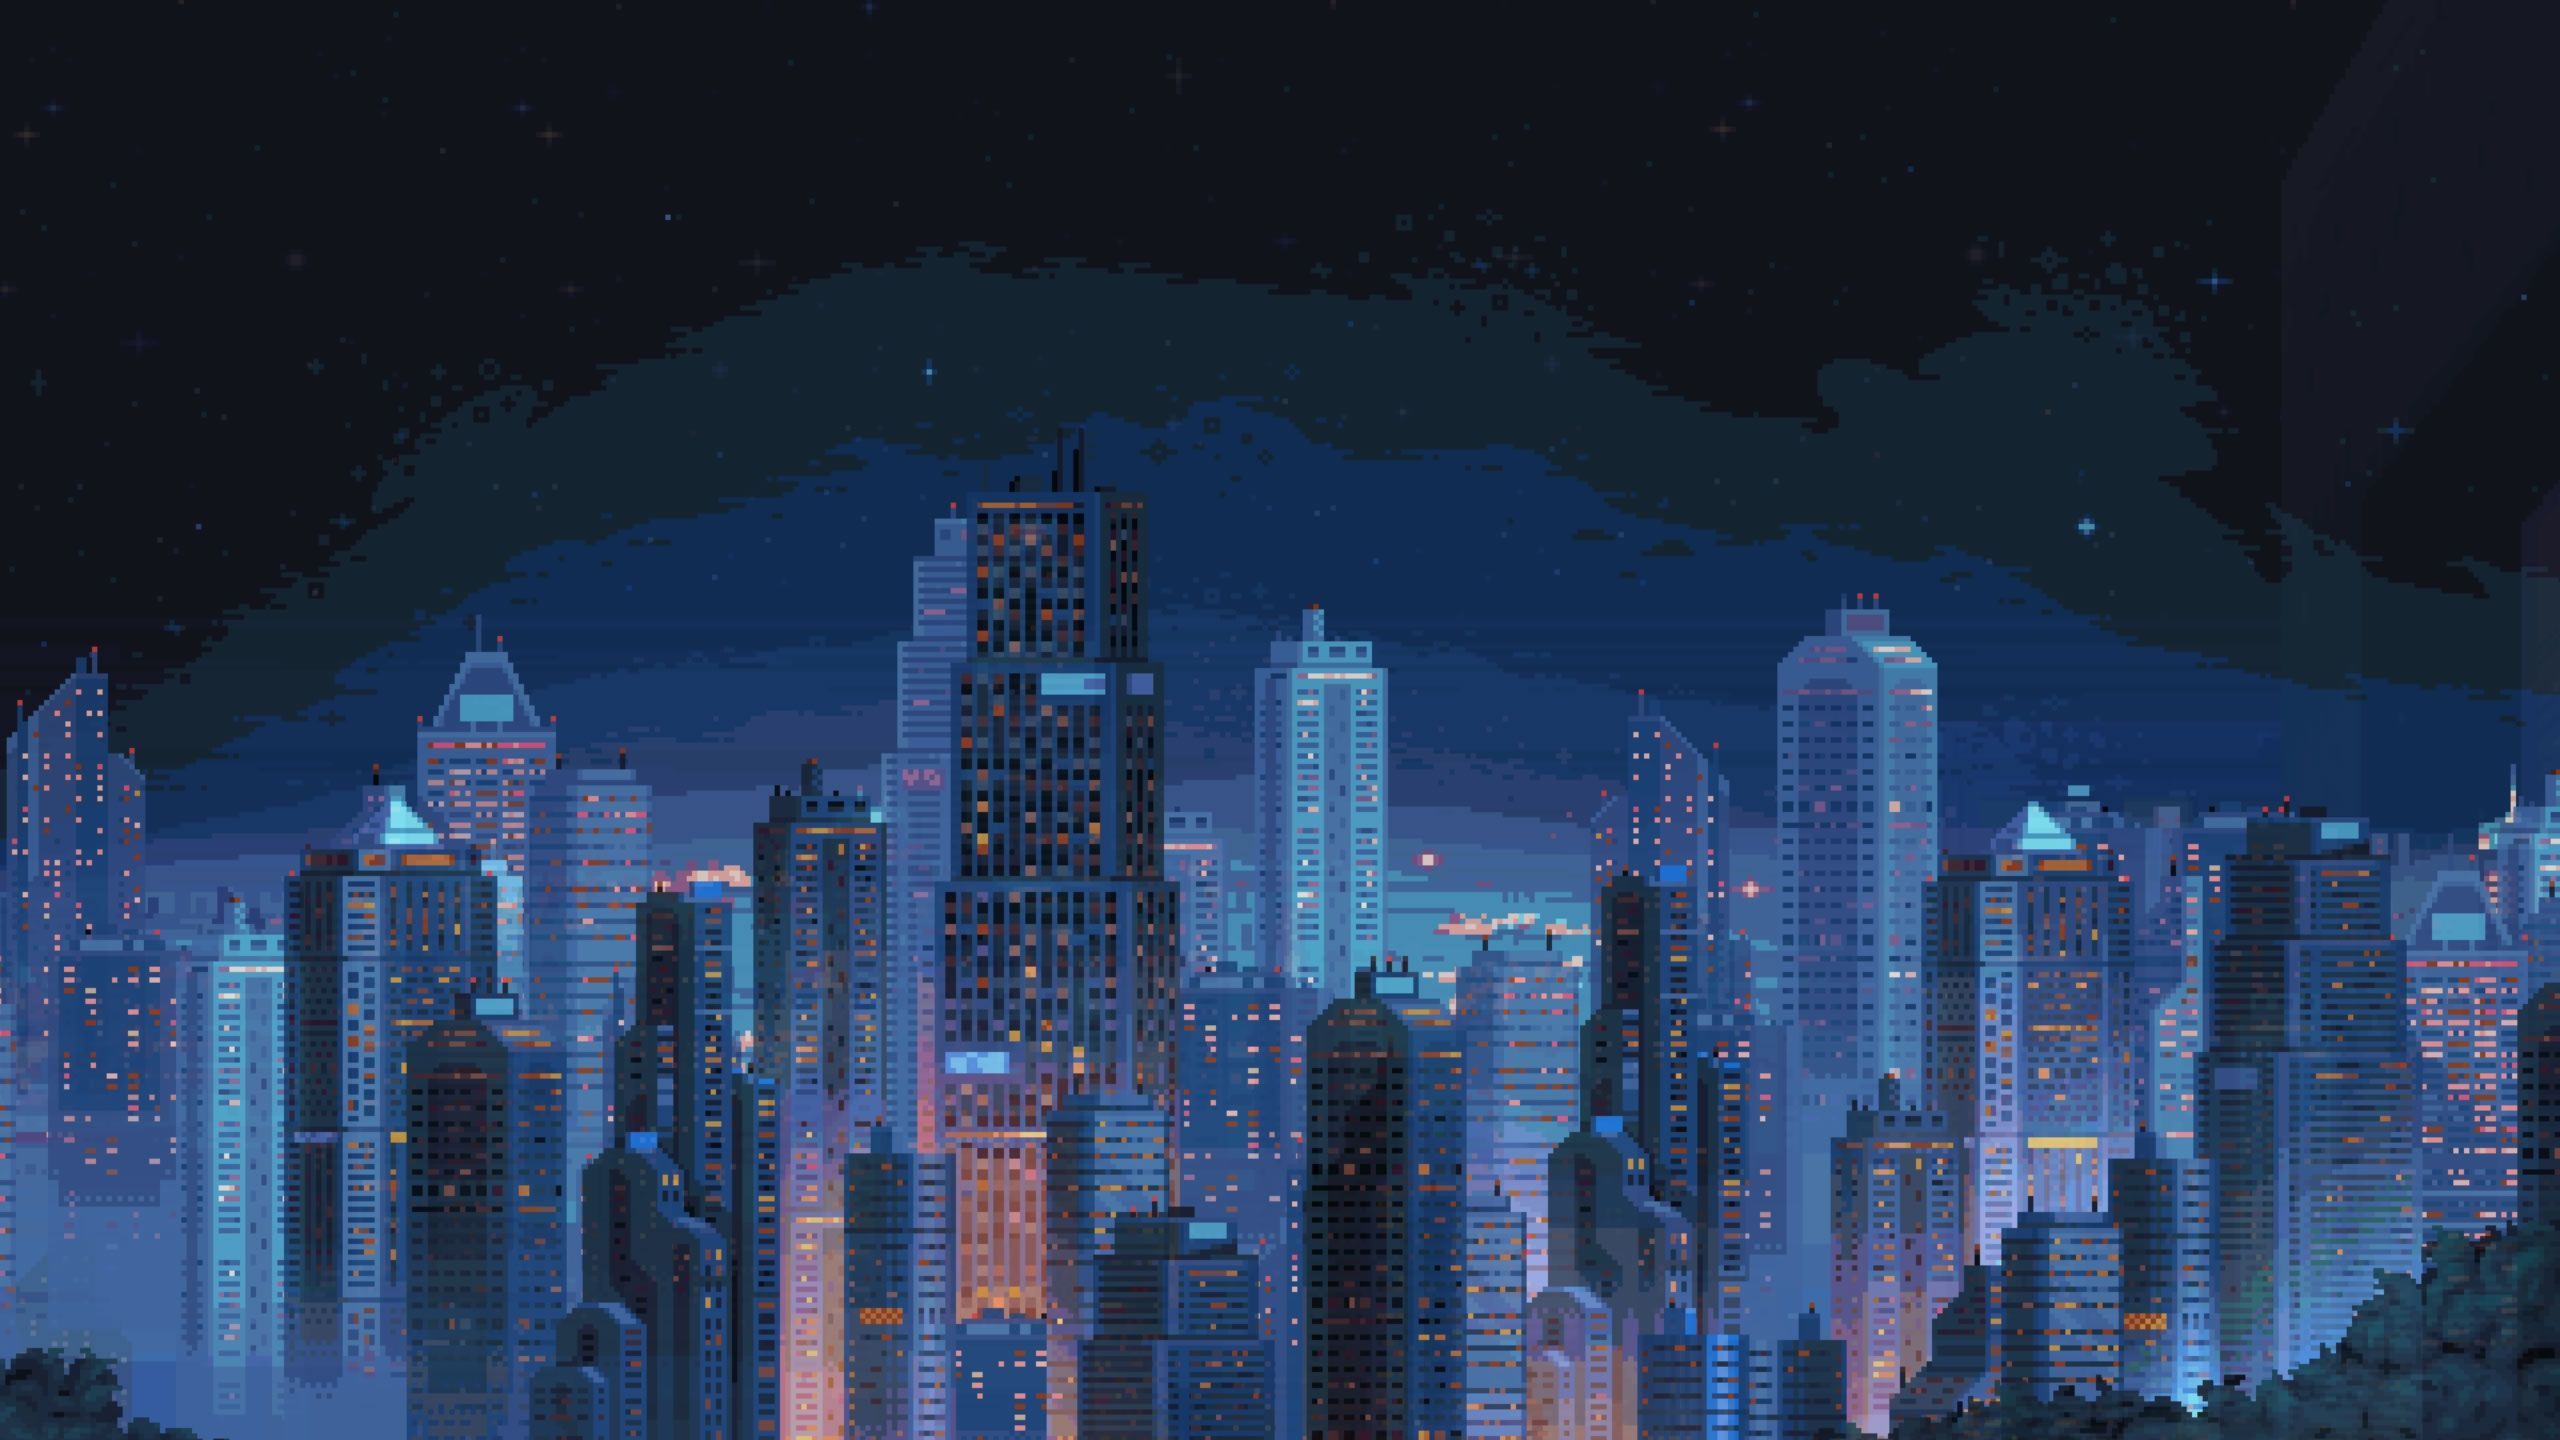 Retro Pixel Wallpaper Free Retro Pixel Background